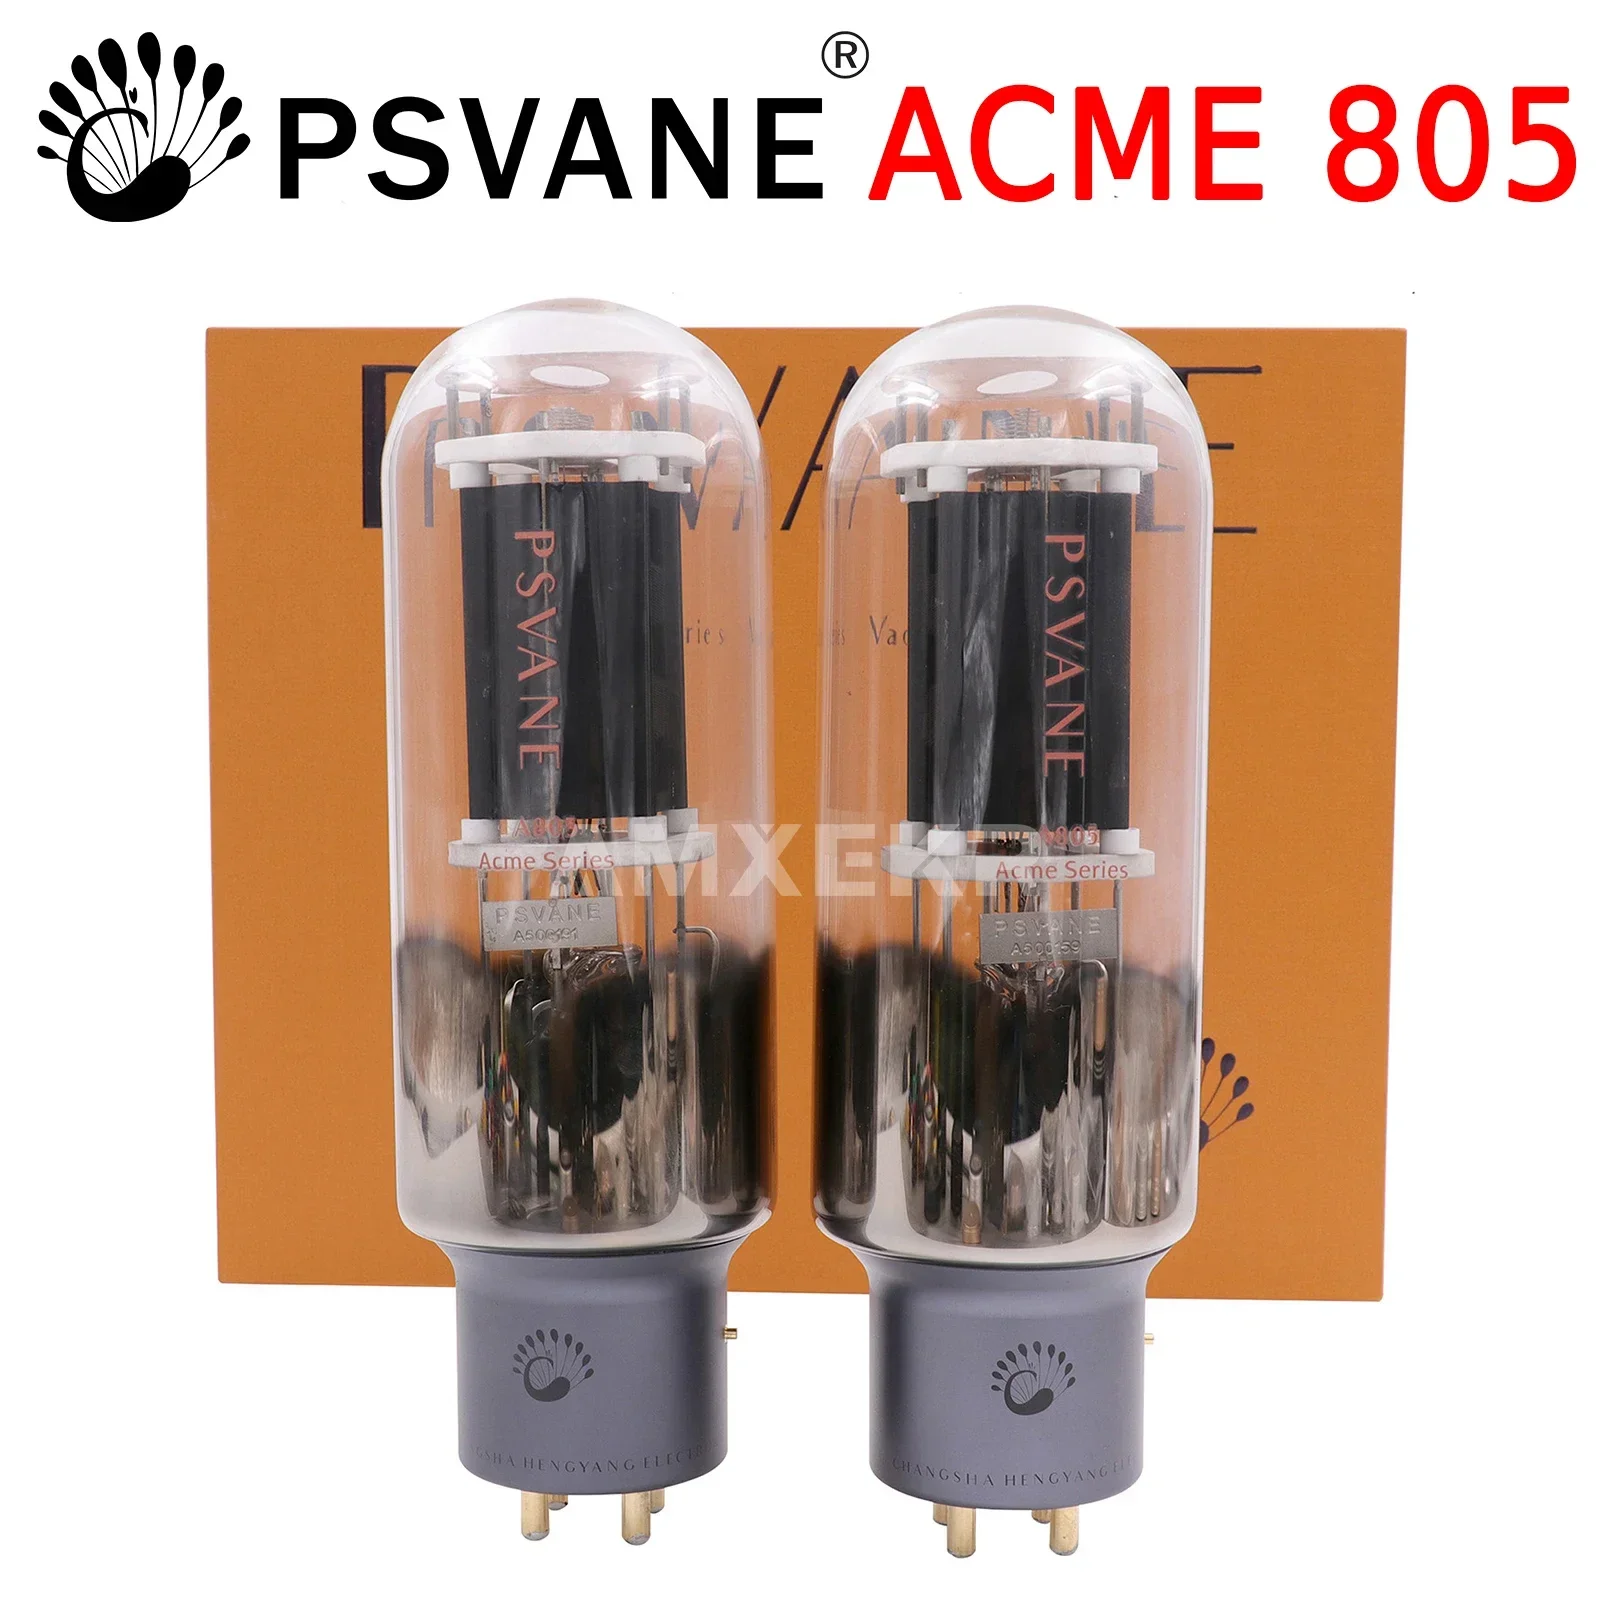 

PSVANE Premium ACME 805 A805 Vacuum Tube FU-5 Vintage Hifi Audio Tube AMP DIY Upgrade Factory Test Match 24 Months Warranty